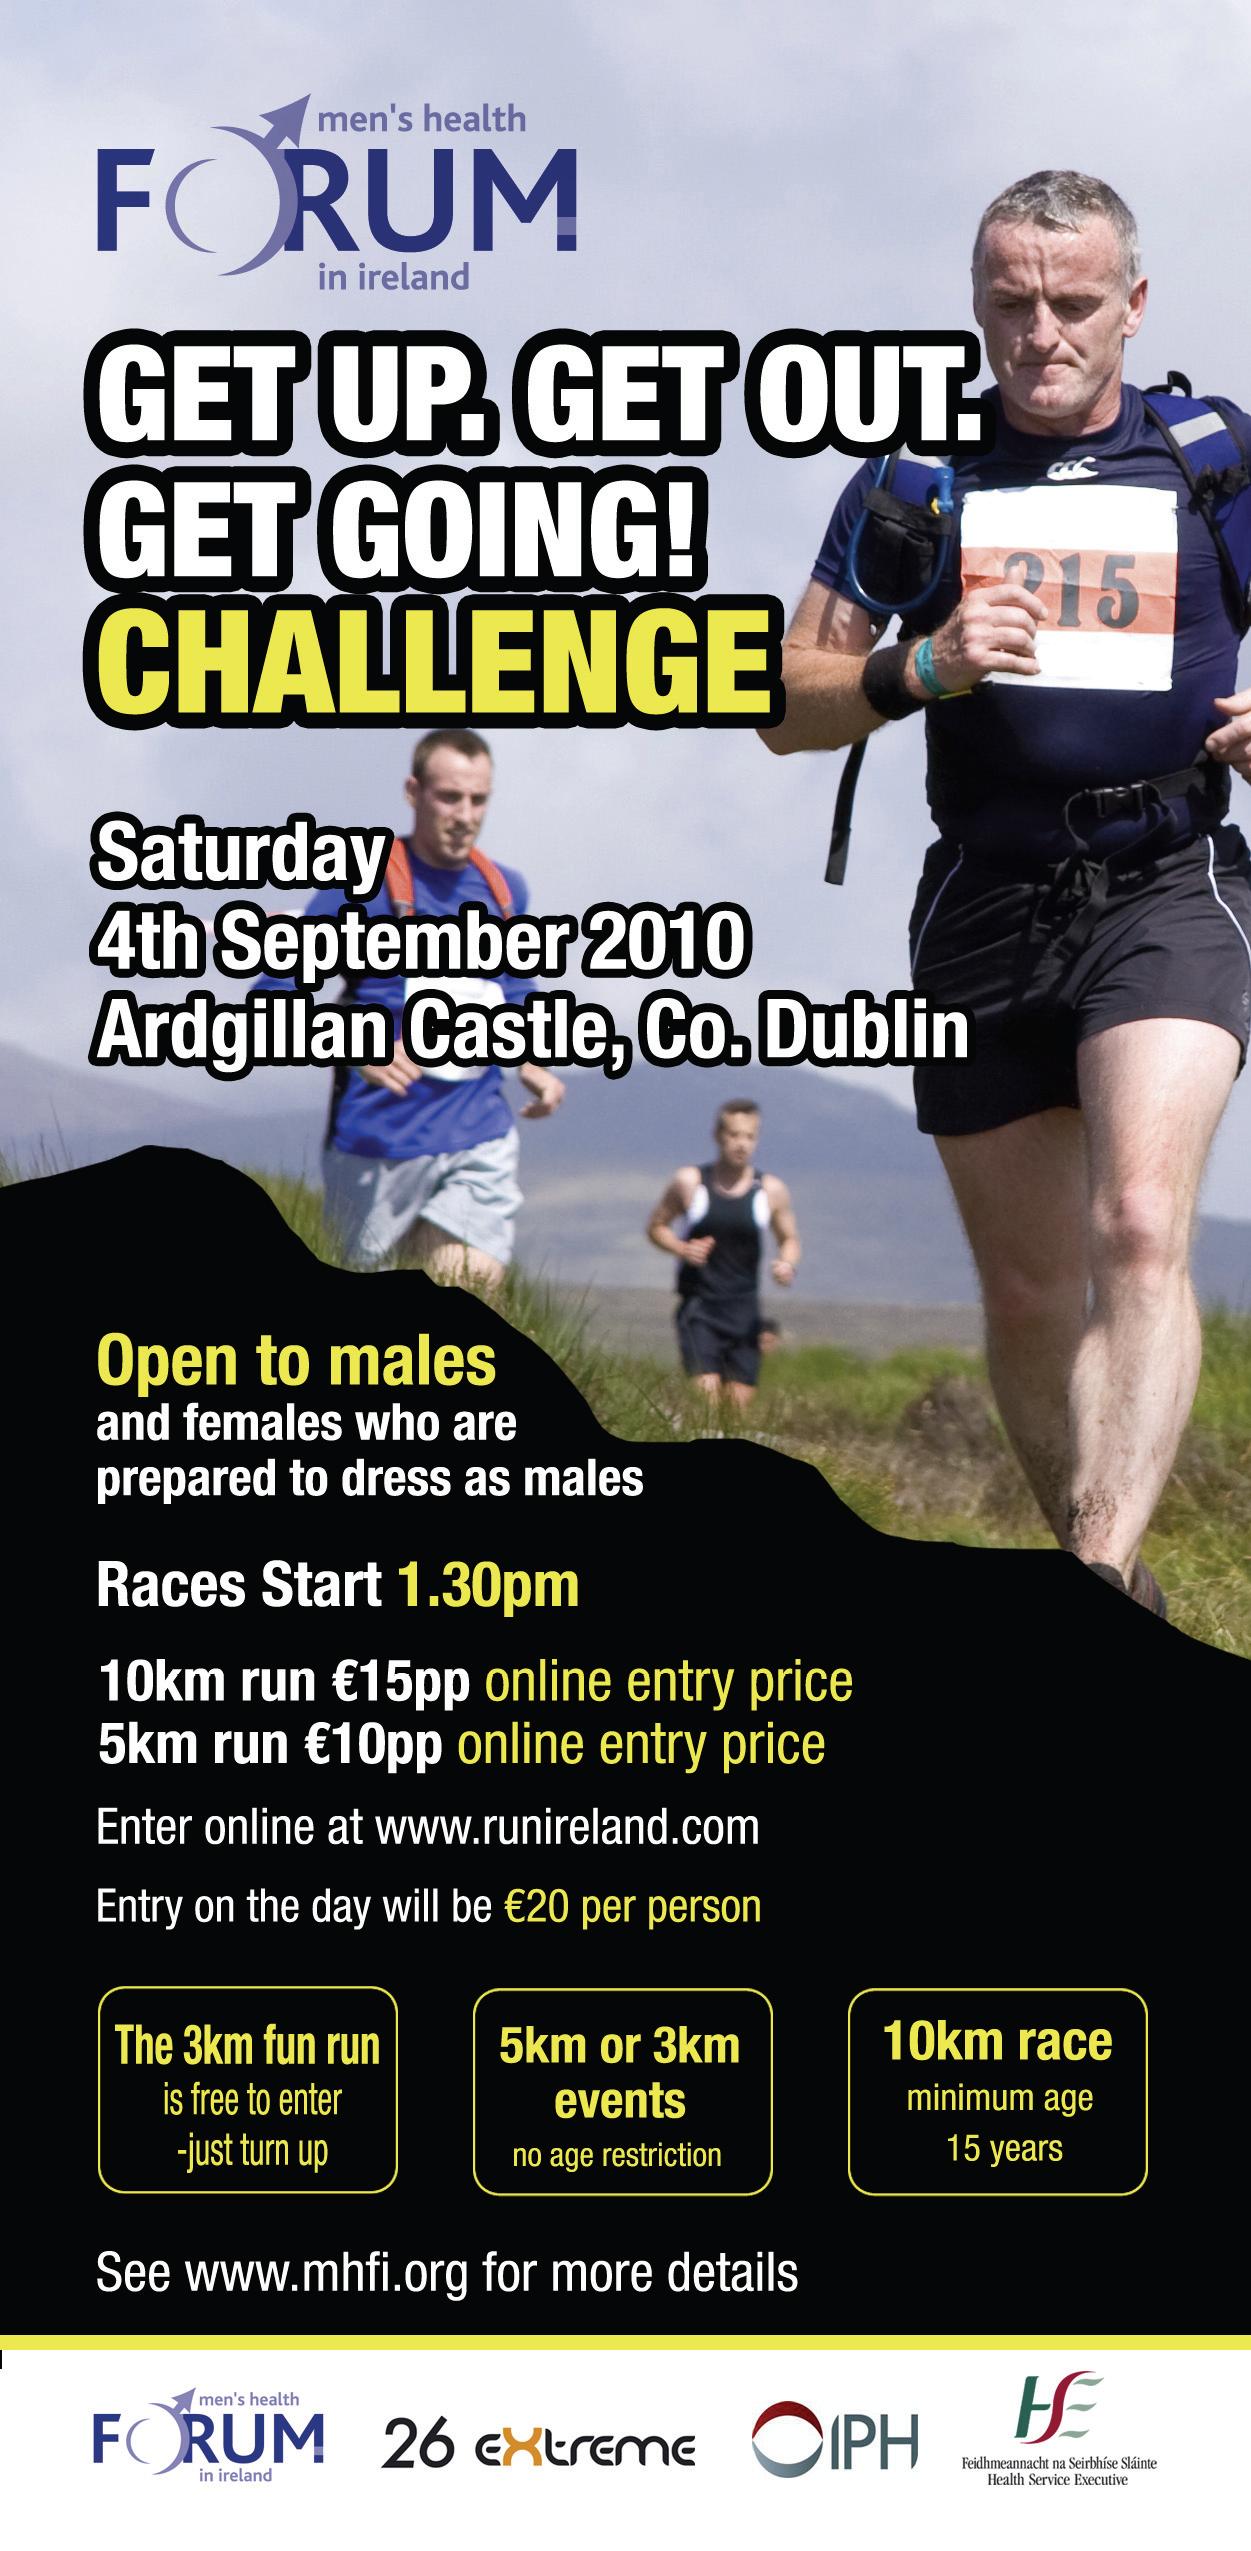 Information on Ardgillan Castle event